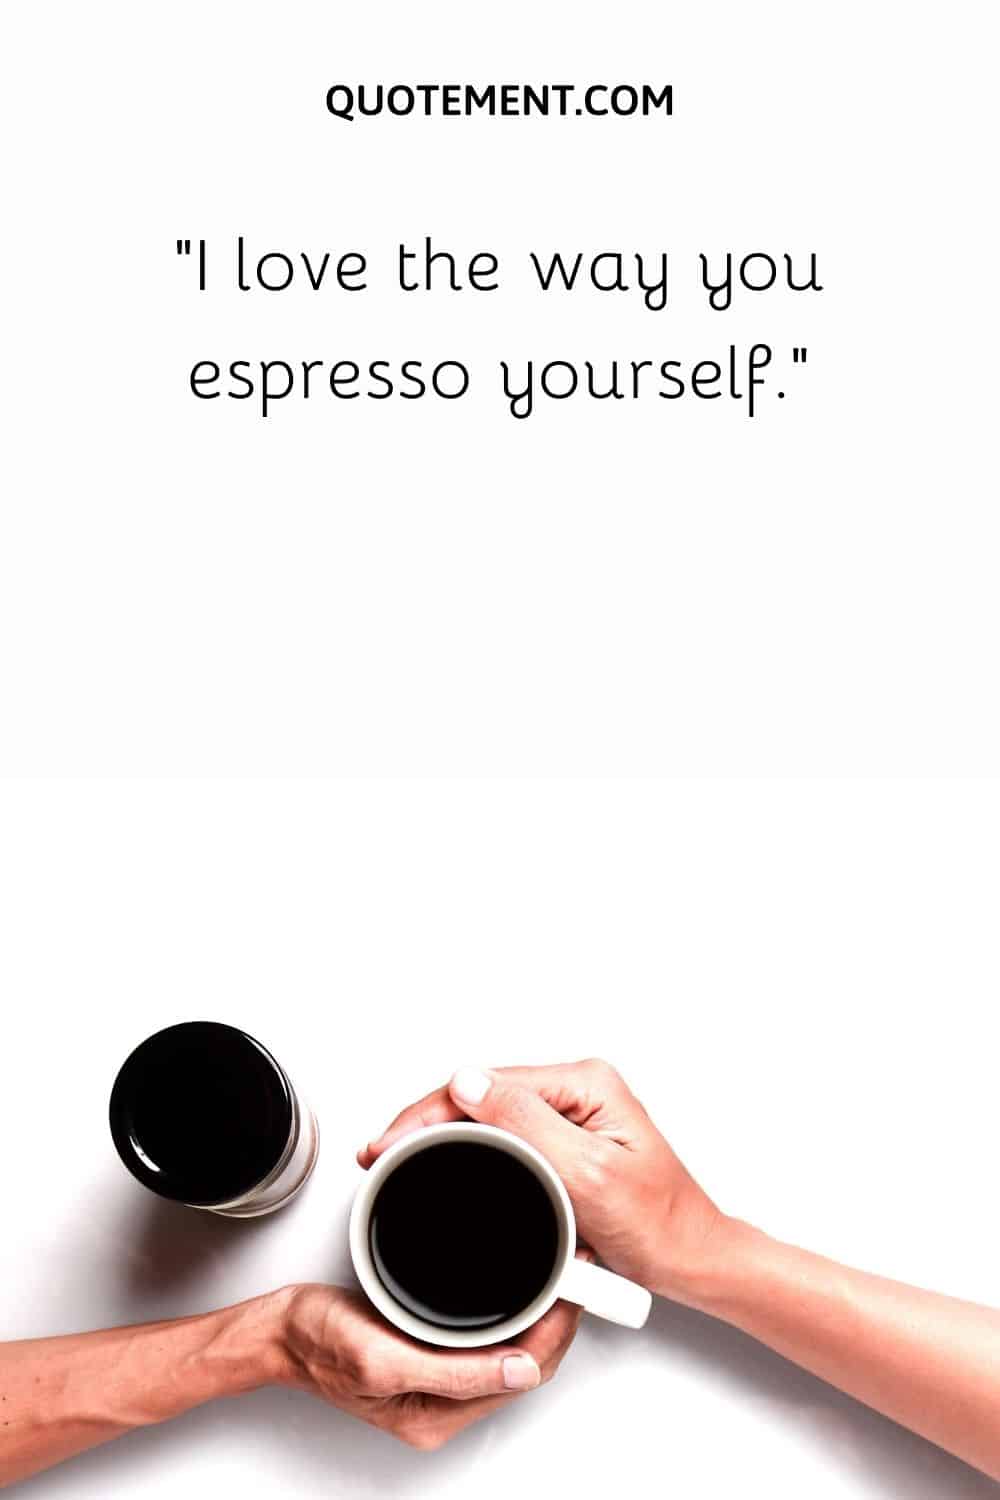 I love the way you espresso yourself